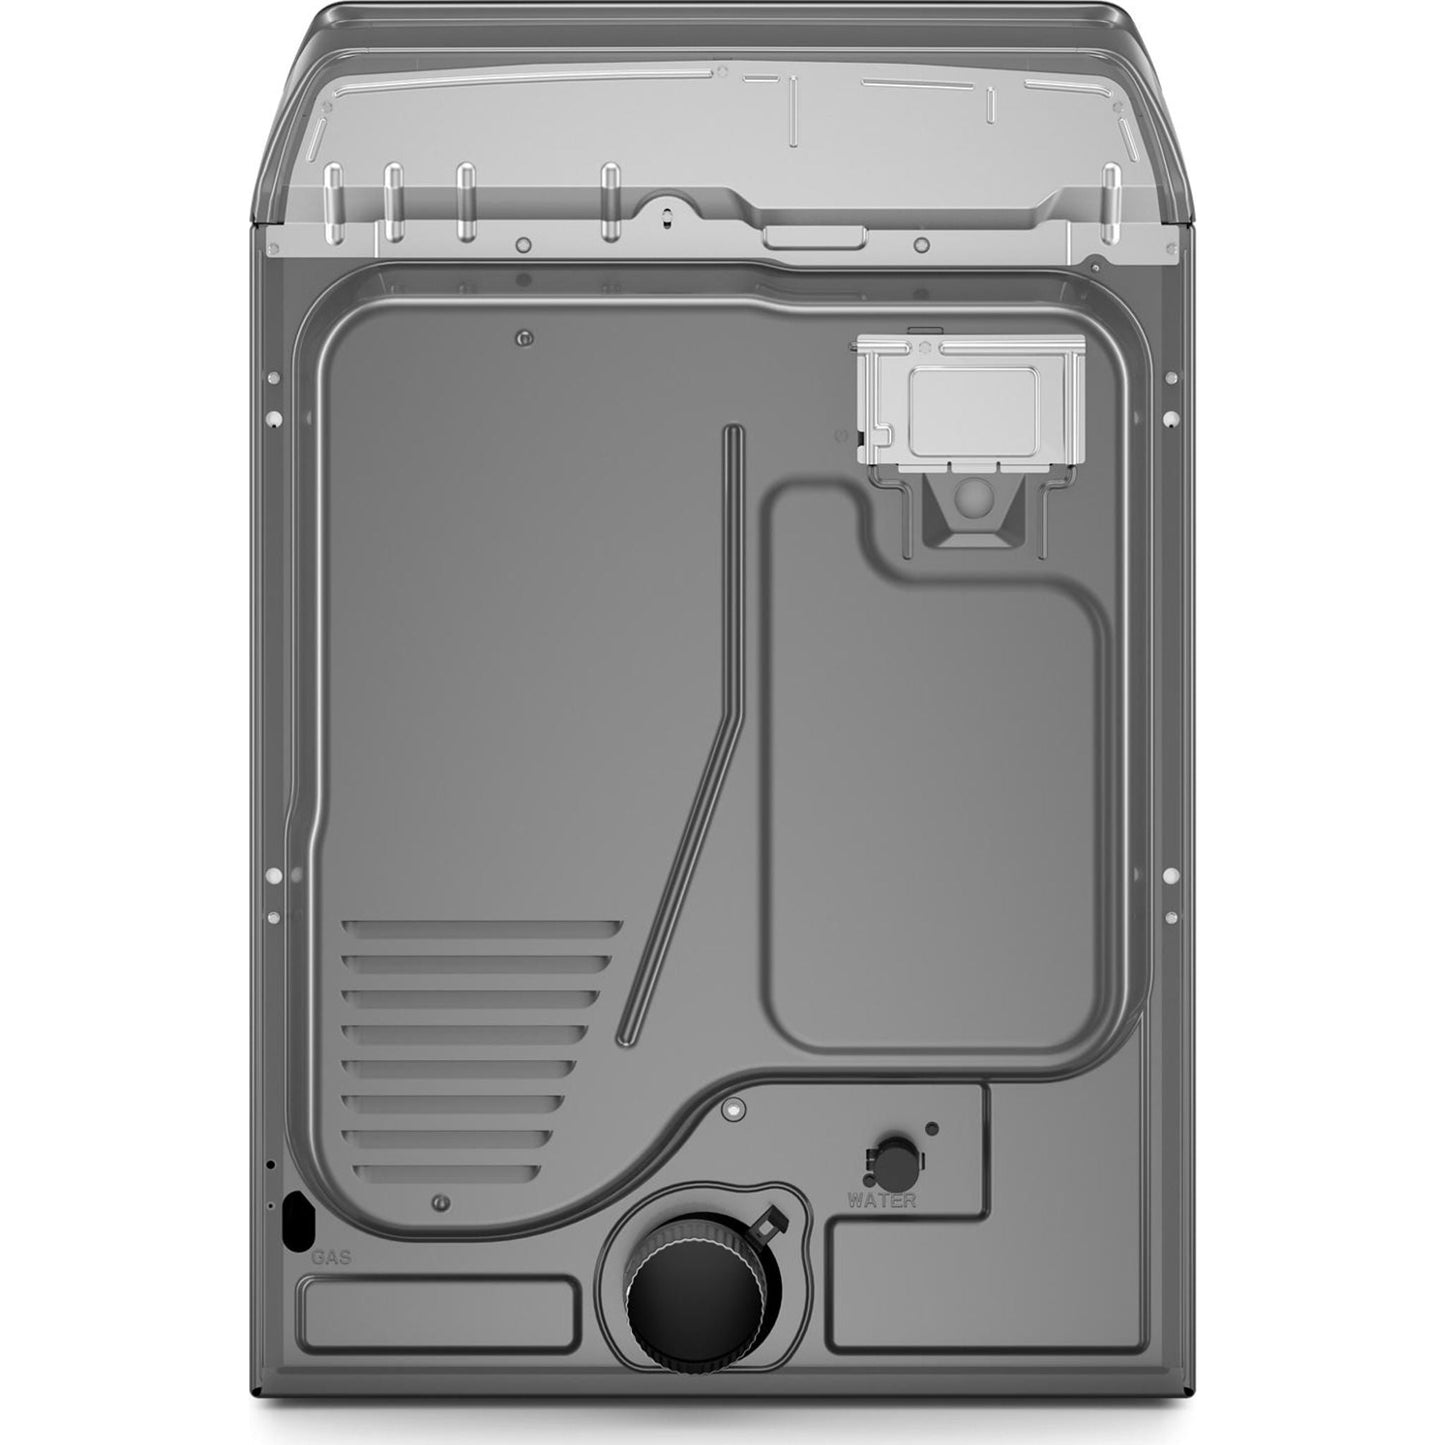 Whirlpool Dryer (YWED6120HC) - Chrome Shadow